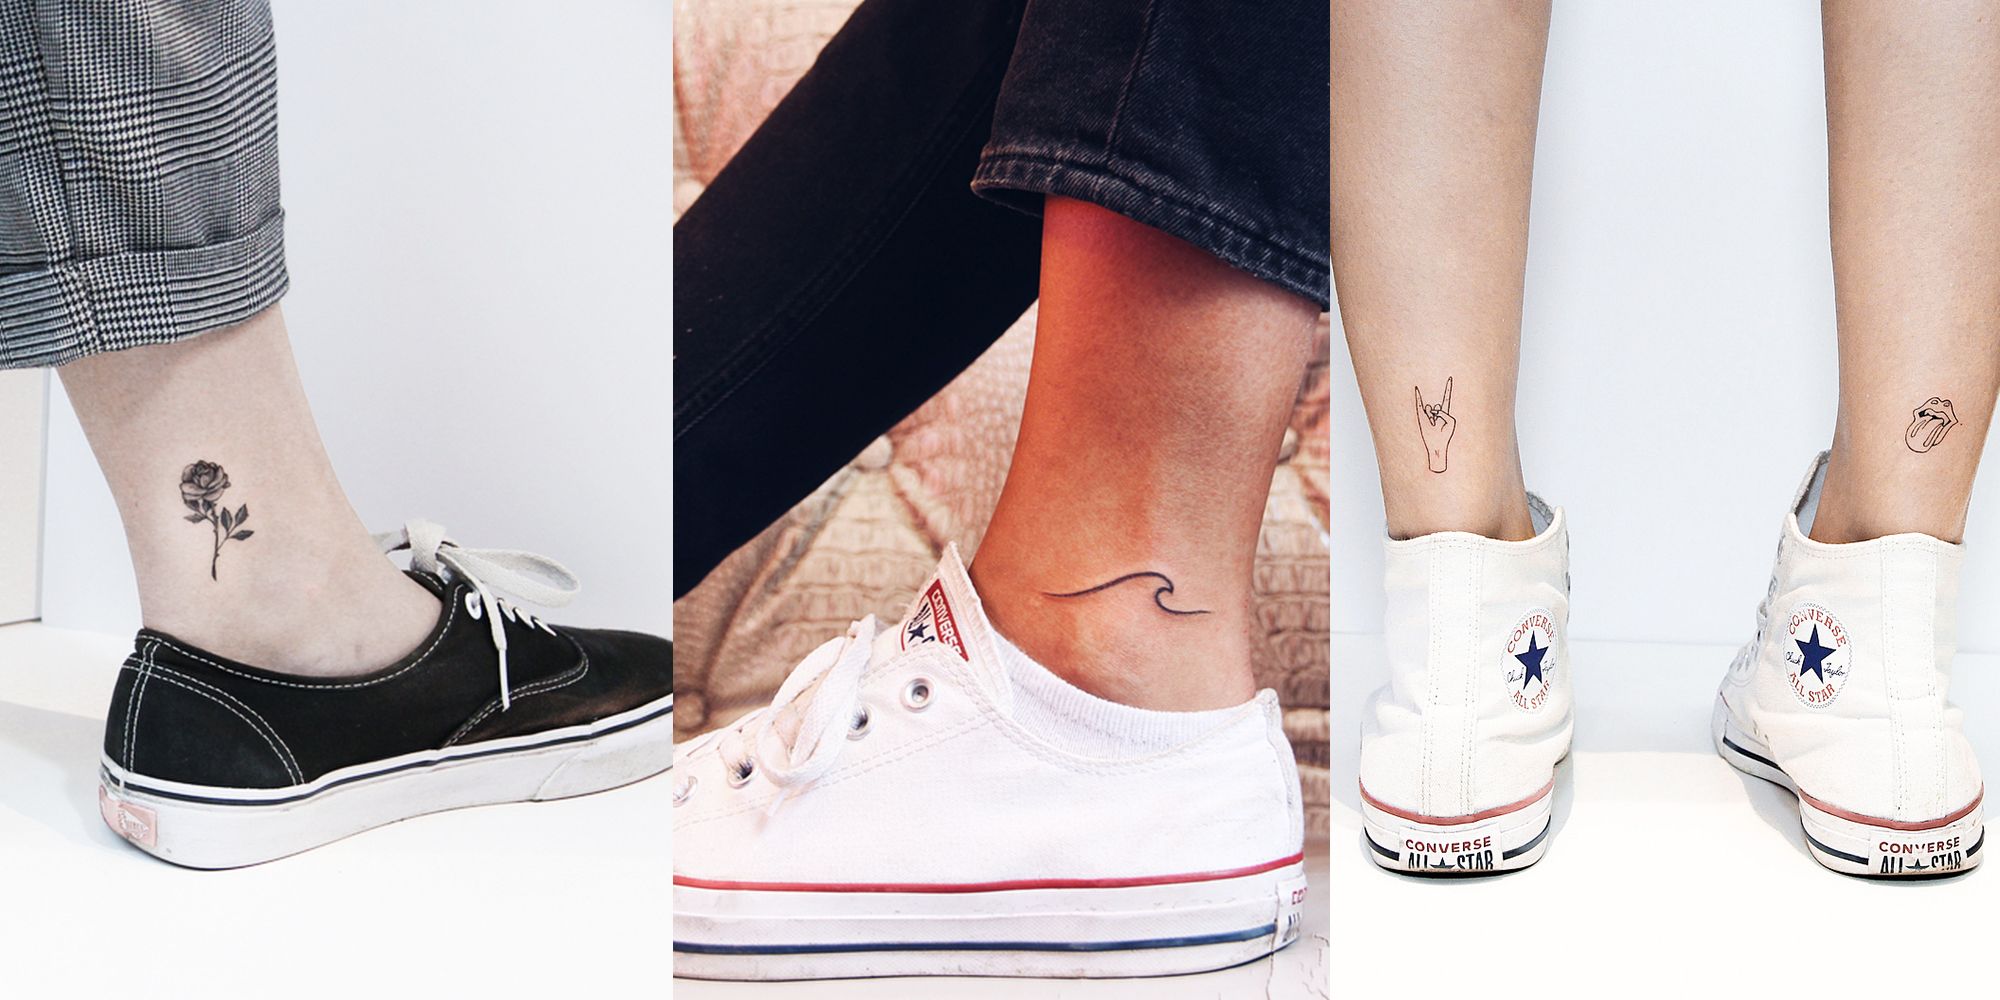 Star Tattoo | Small Star Tattoo Design | Ankle Tattoo | Anklet Tattoo  Design - YouTube